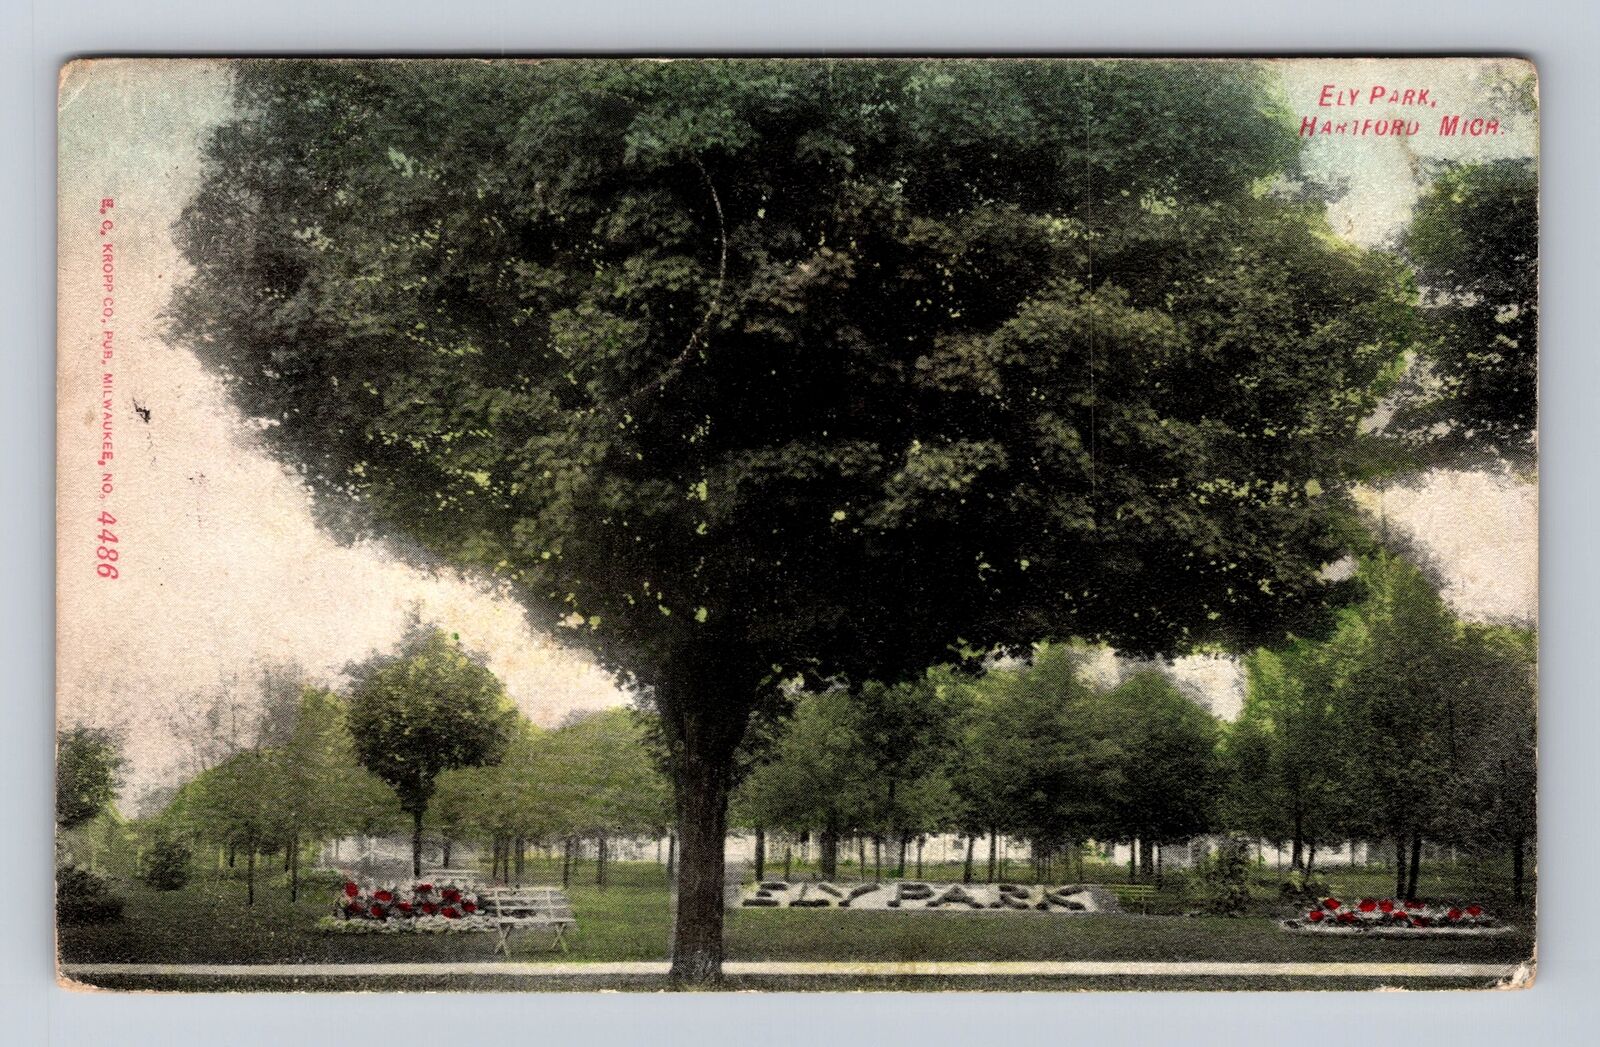 Hartford MI-Michigan, Ely Park, Antique, Vintage c1908 Souvenir Postcard